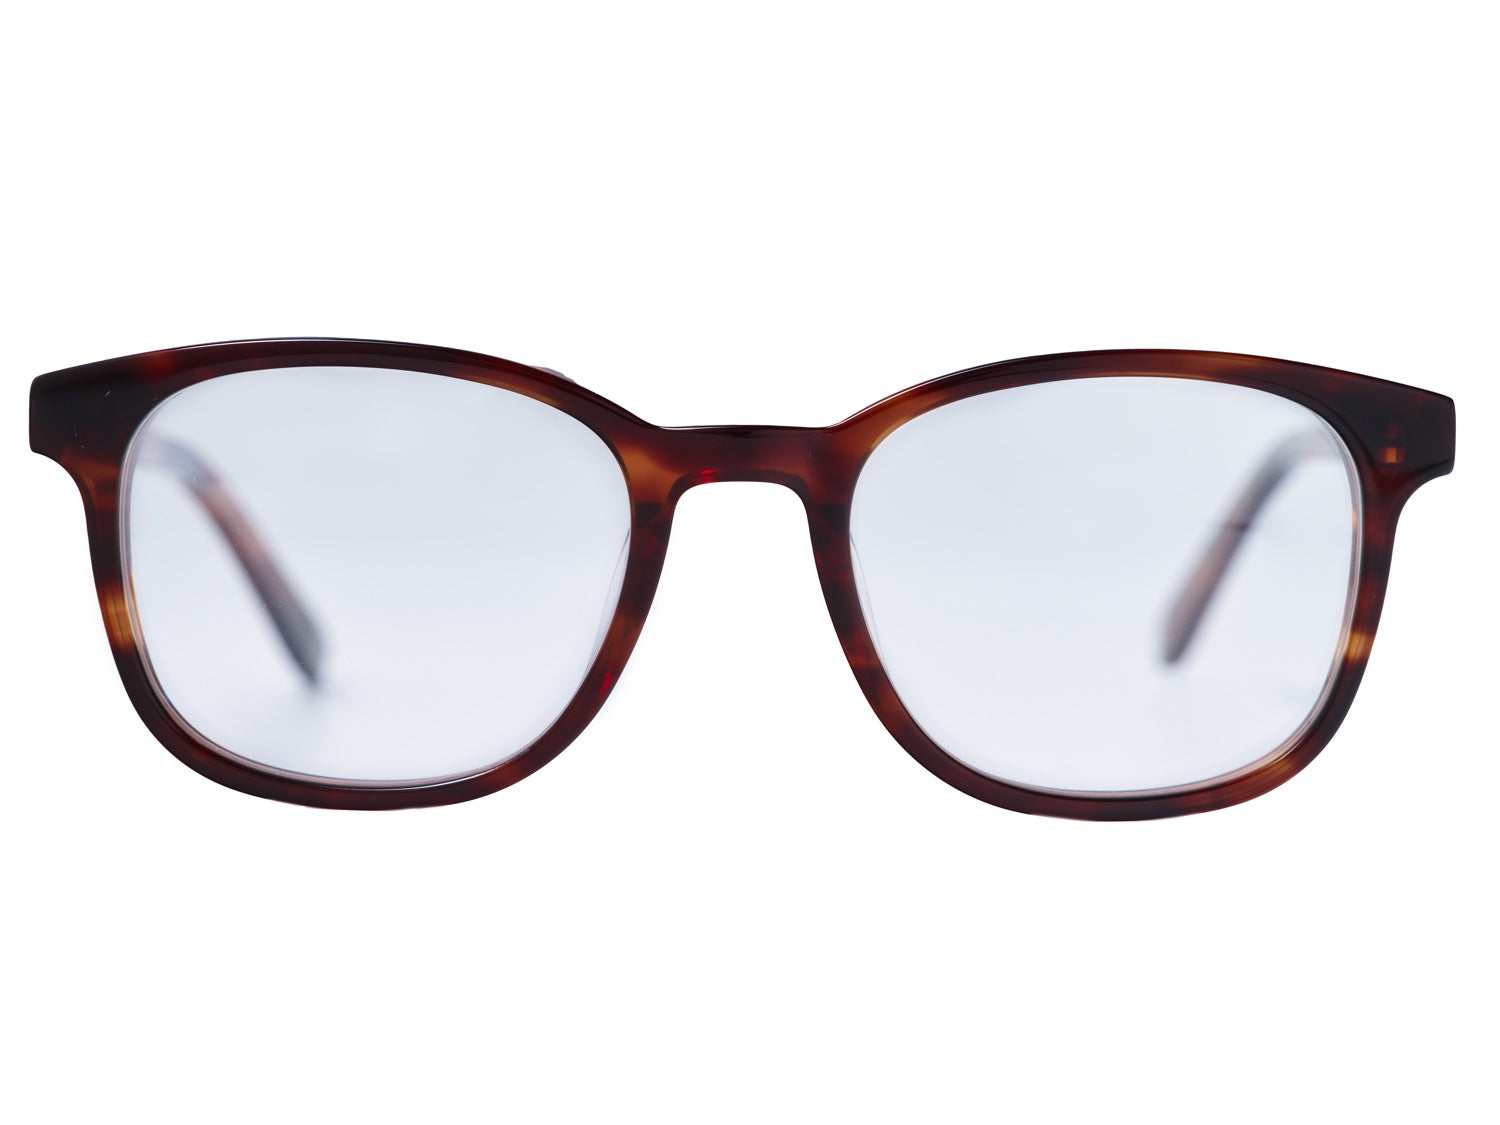 YMC X Bridges & Brows Hakon Tortoiseshell Glasses